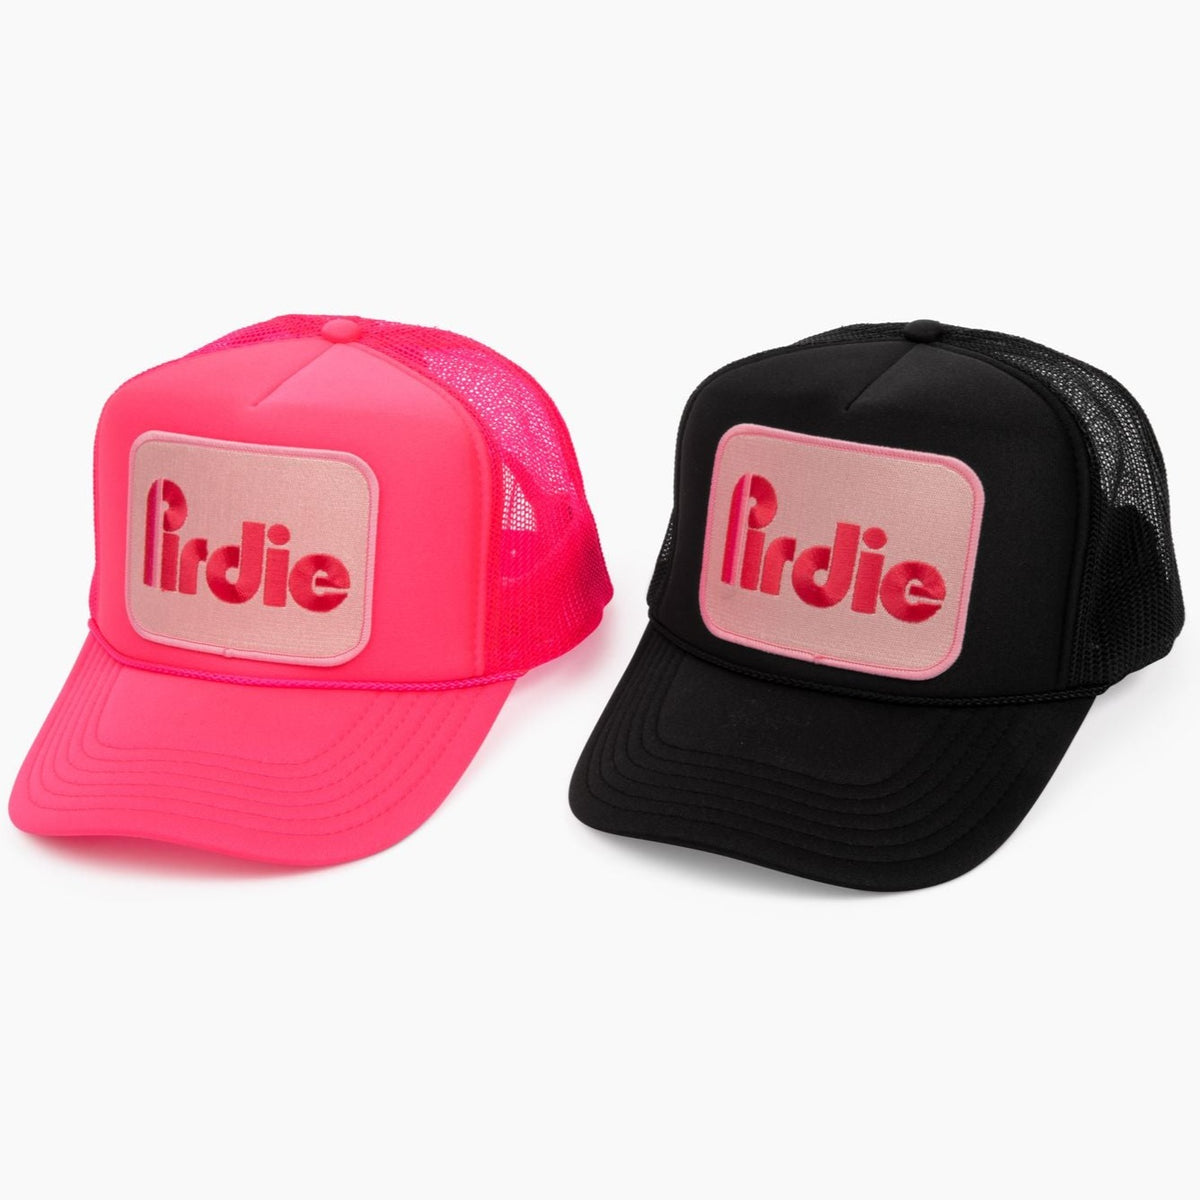 Pirdie Trucker Hat